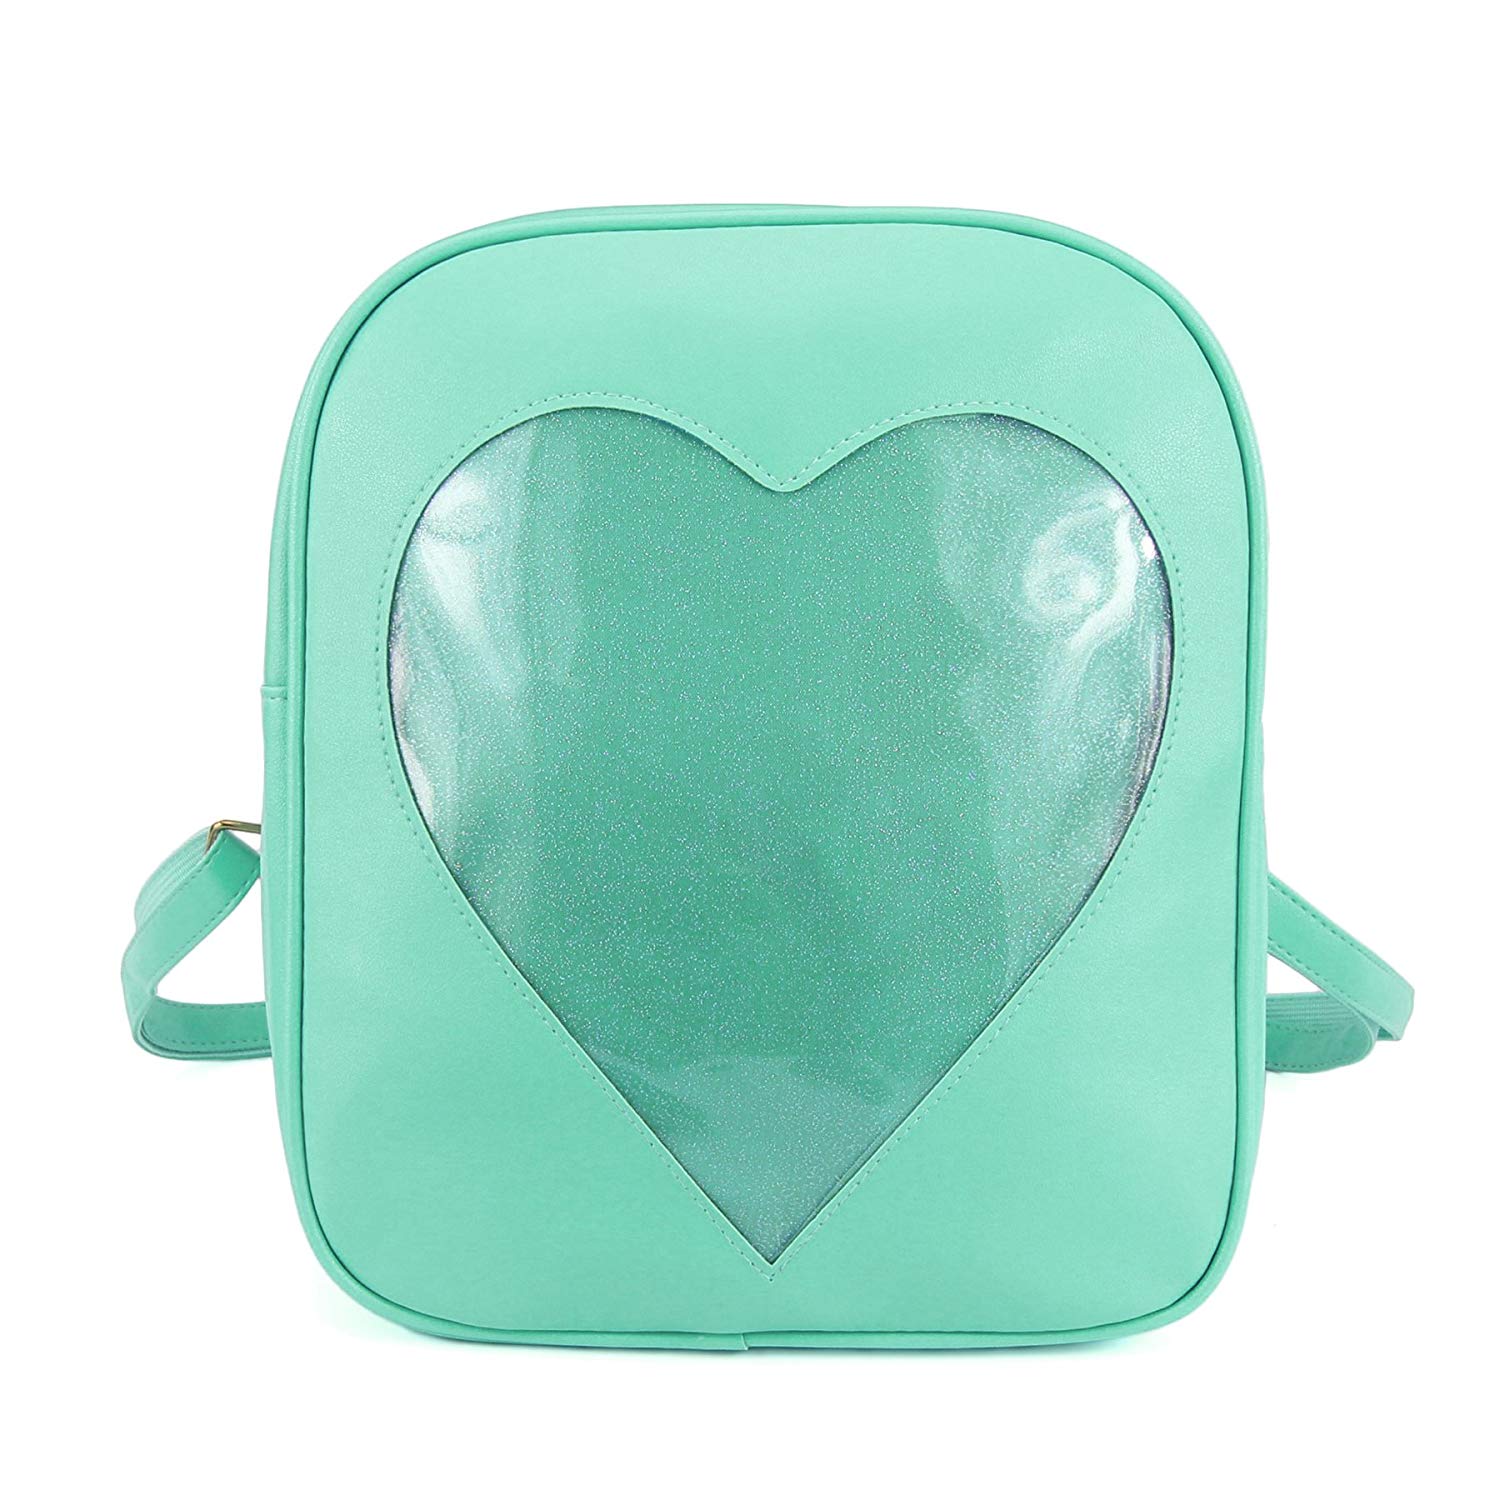 ITA Bag Green Mint Teal Transparent Glitter Heart Backpack Harajuku Purse Traveler Bag Girls